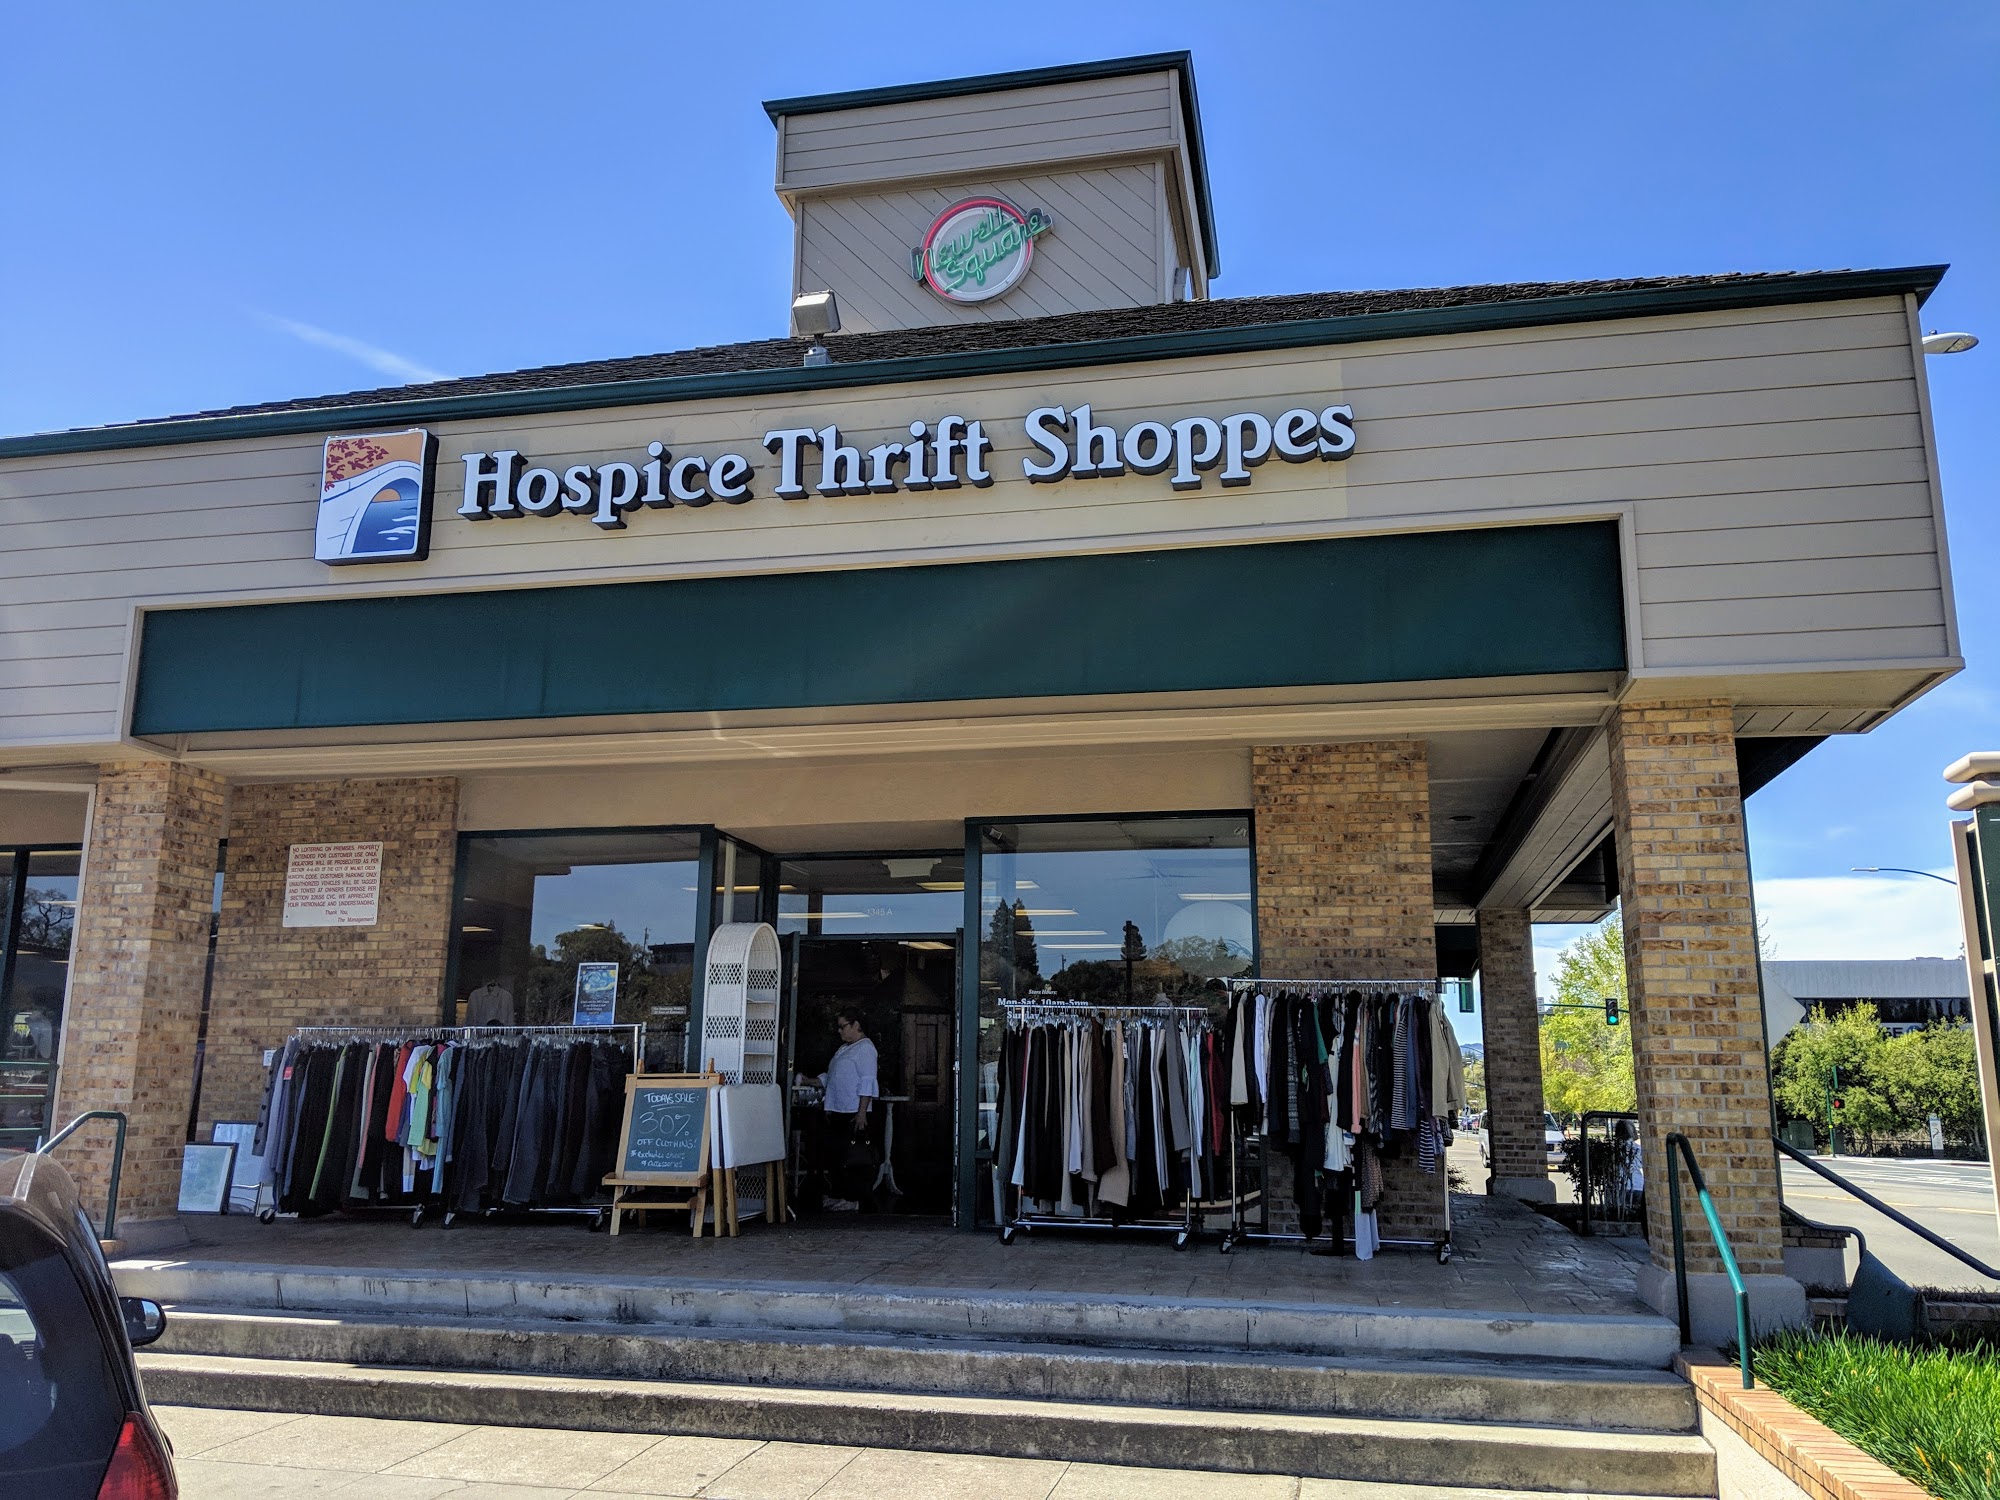 Hospice Thrift Shoppes